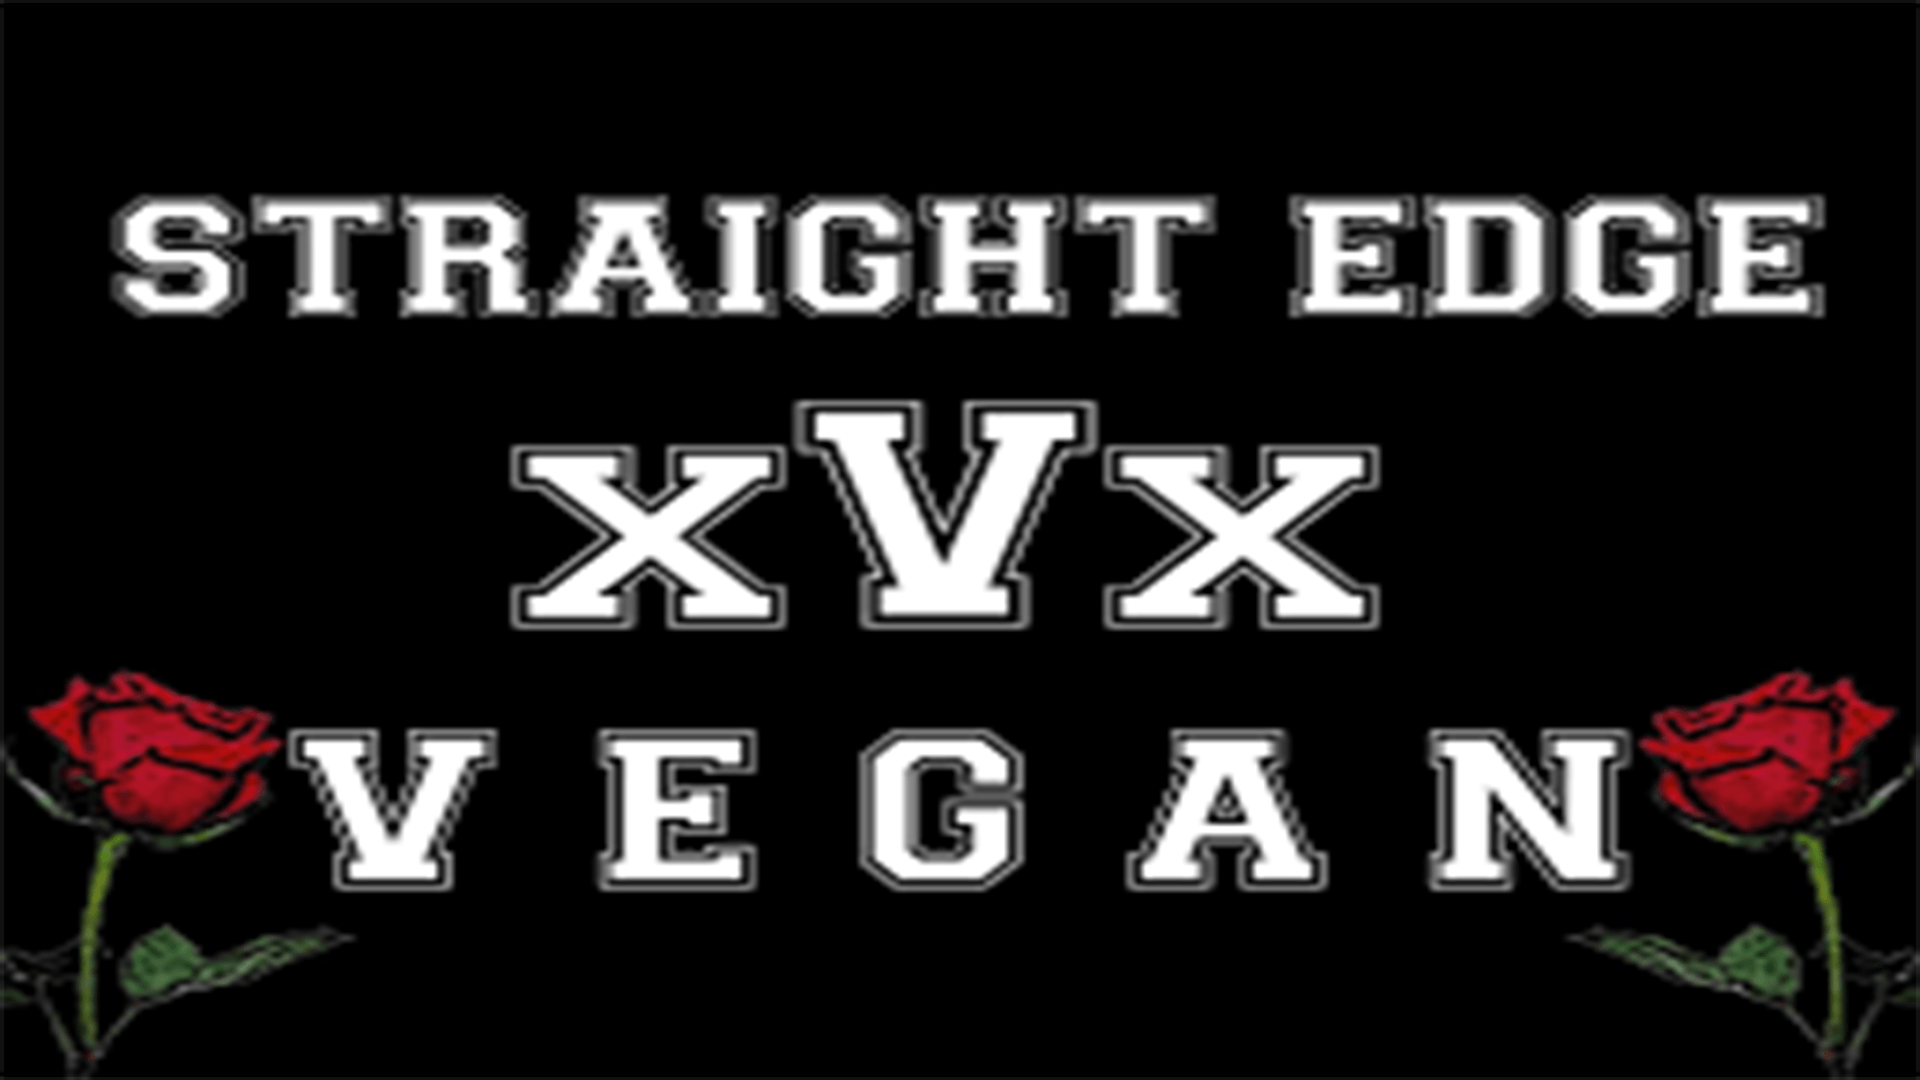 XVX for Vegan Straight Edge. Vegan Fashion Venture